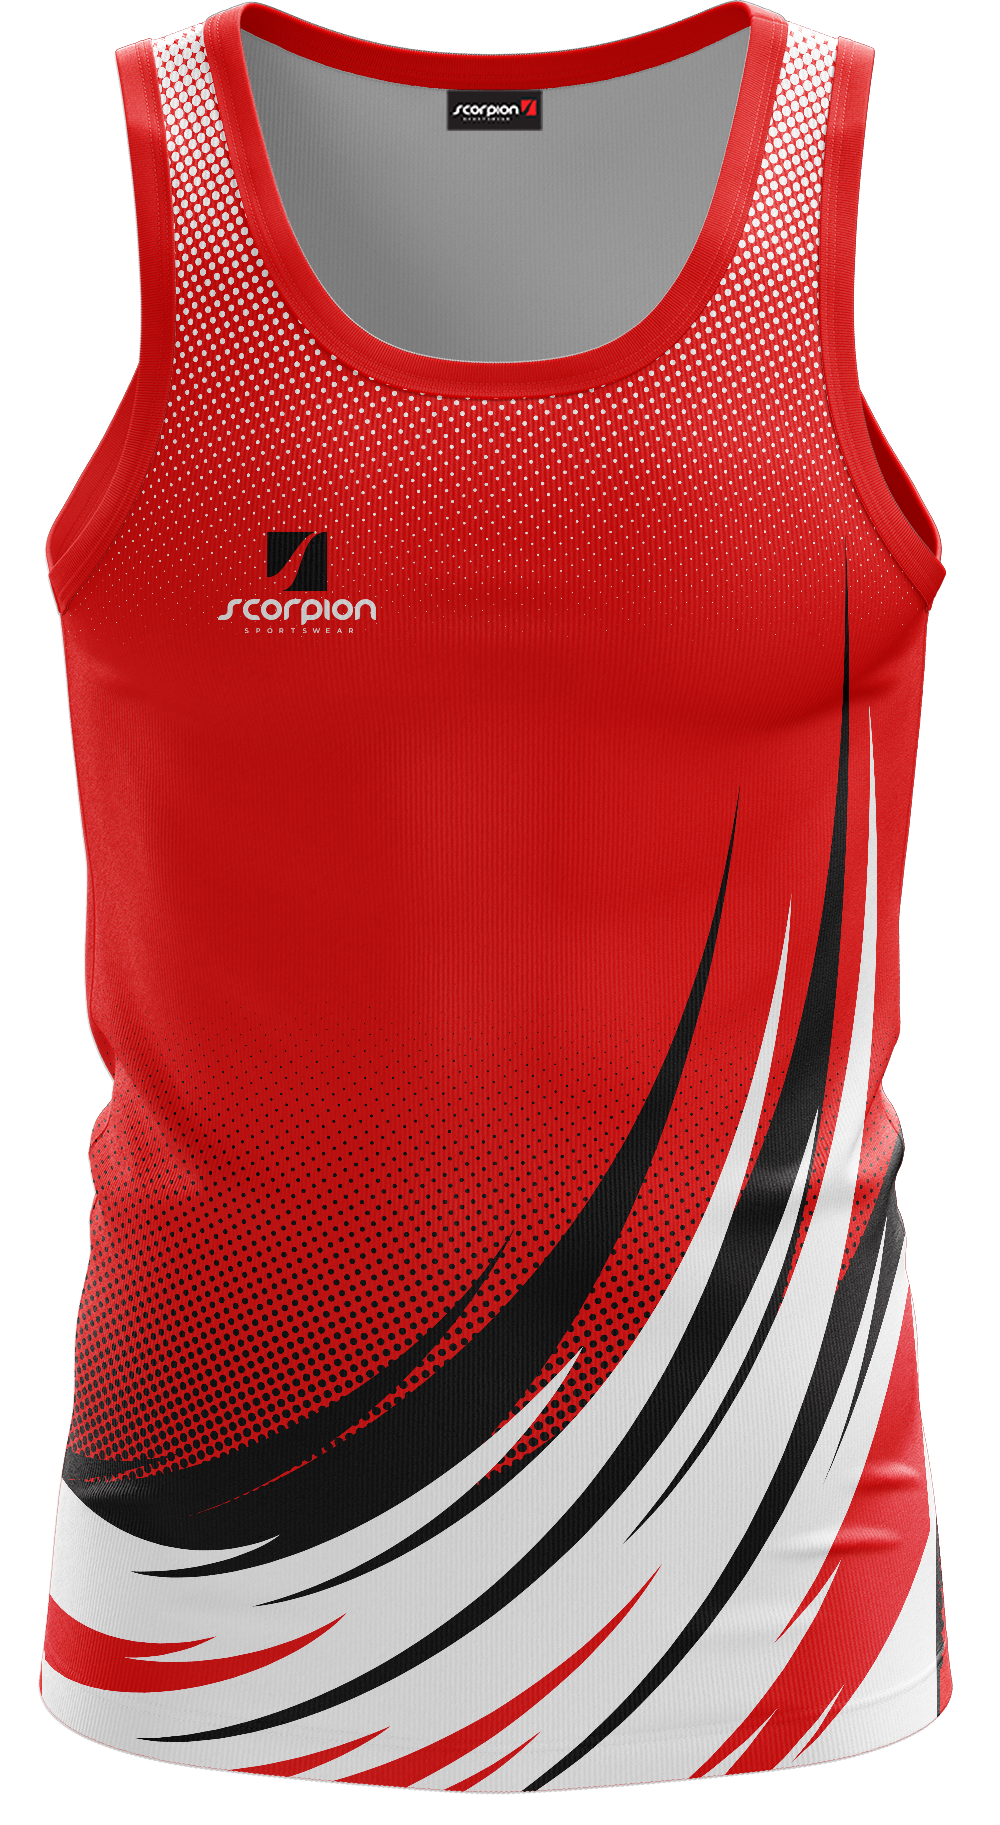 Scorpion Vests Pattern 5 - Red/Black/White